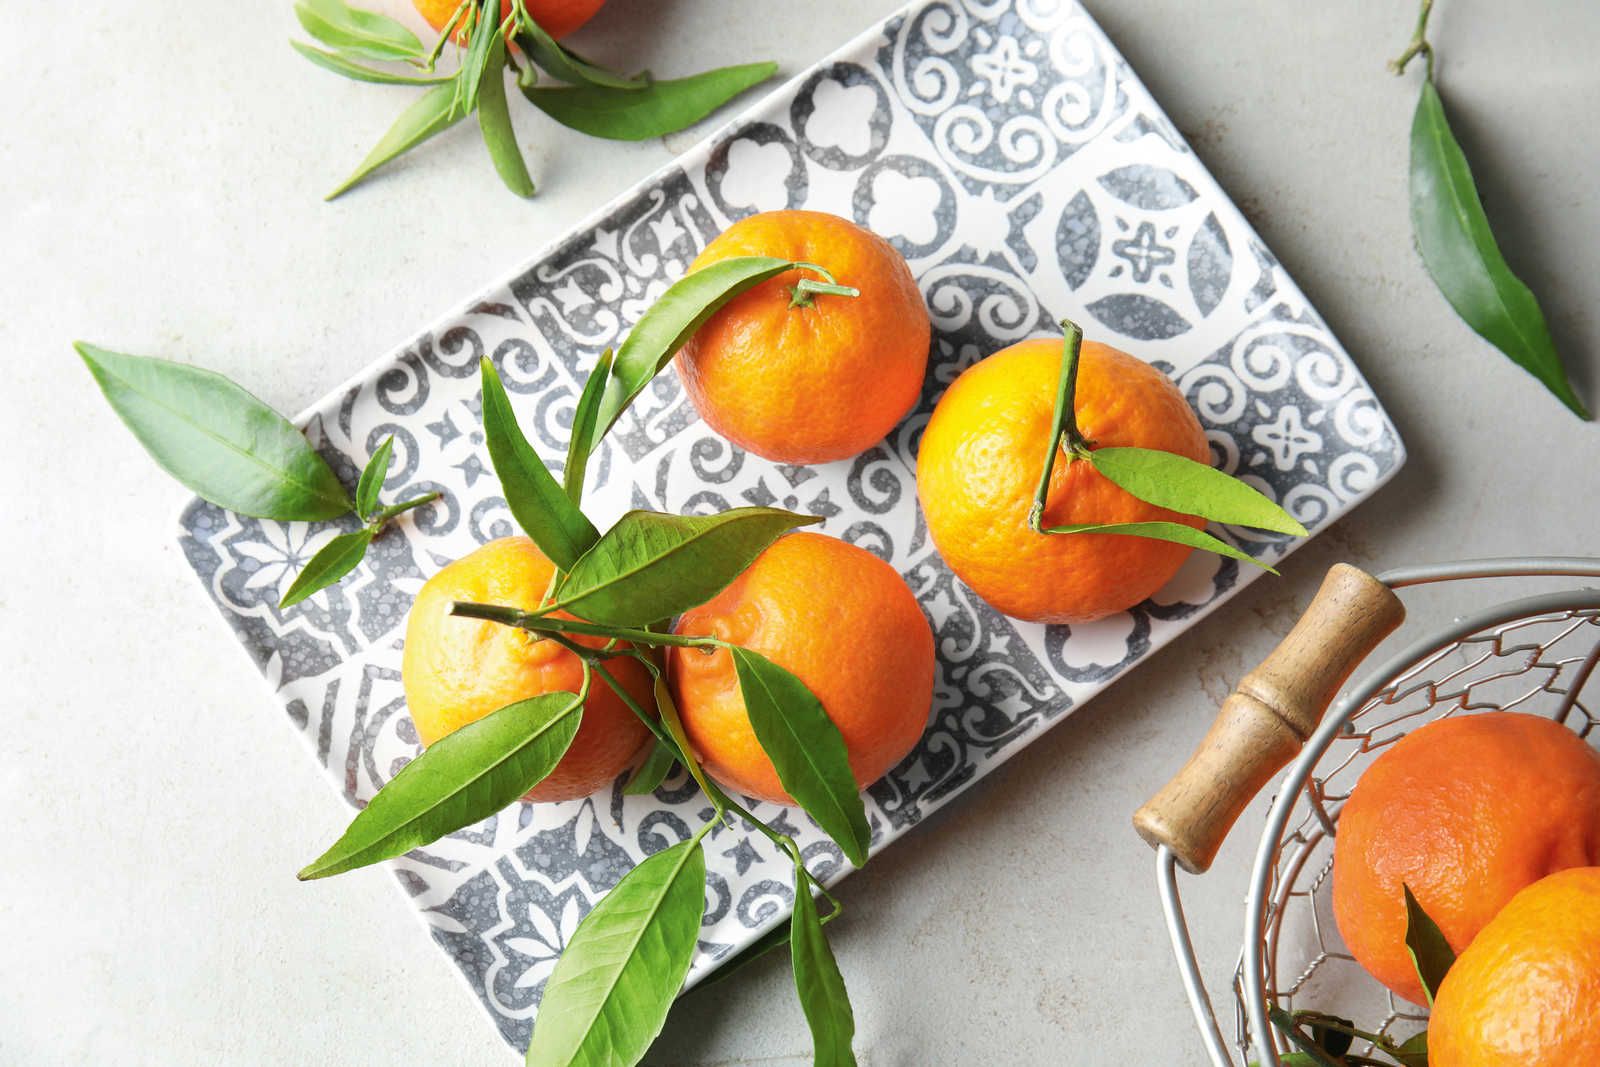             Orange Scent Sticks with Mood Uplifting Fragrance - 100ml
        